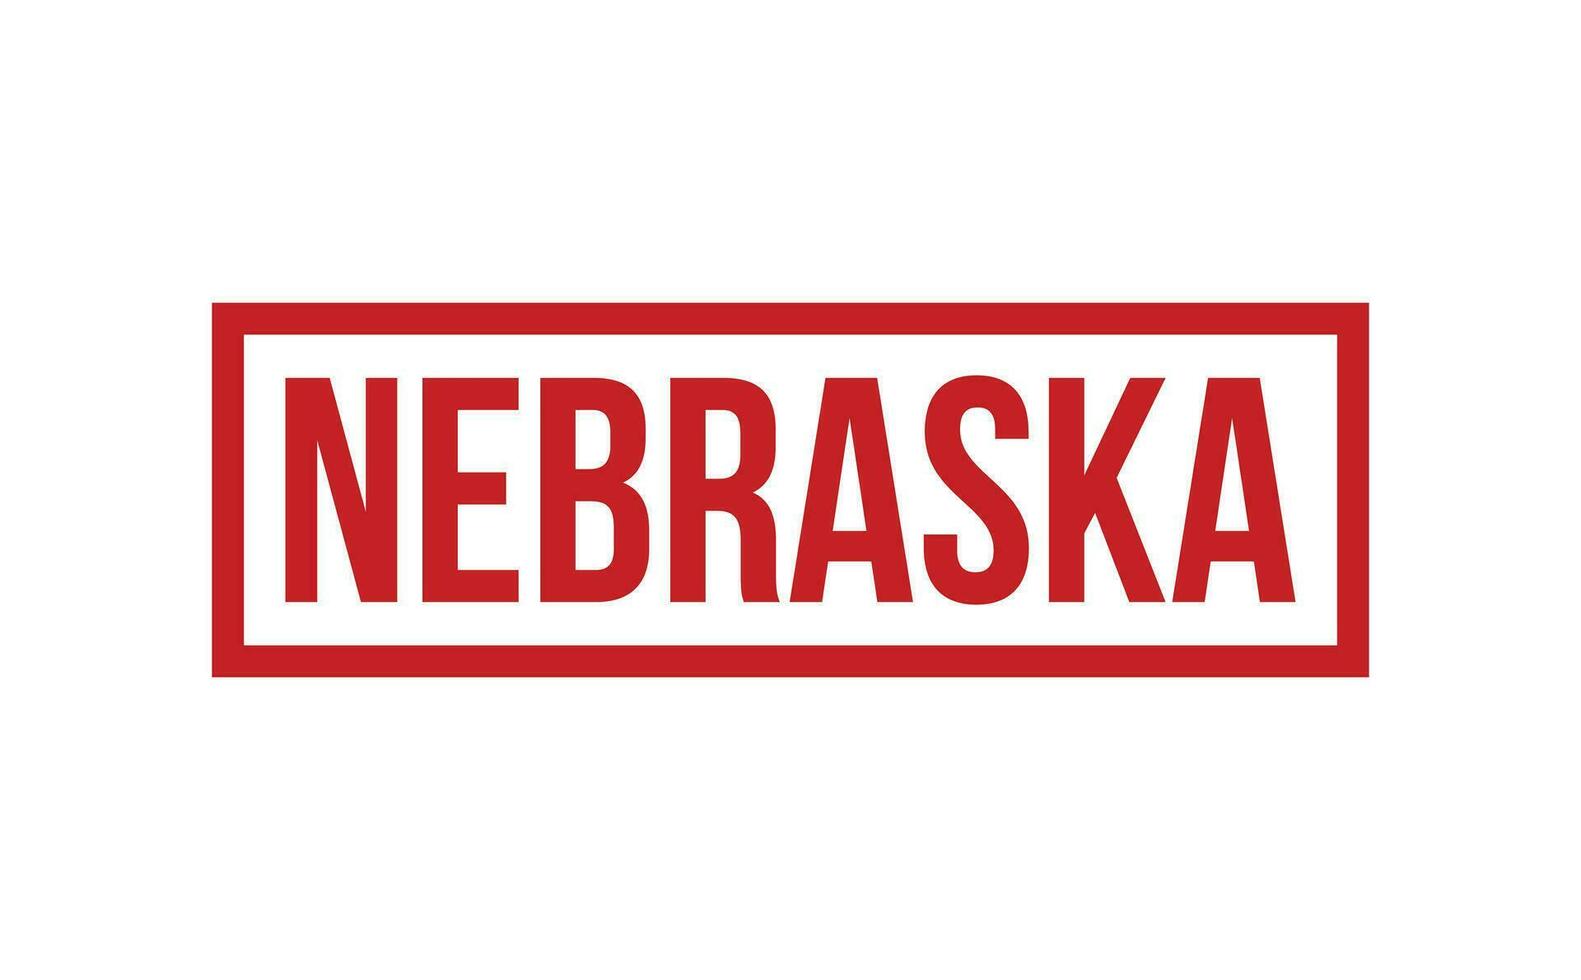 Nebraska Rubber Stamp Seal Vector